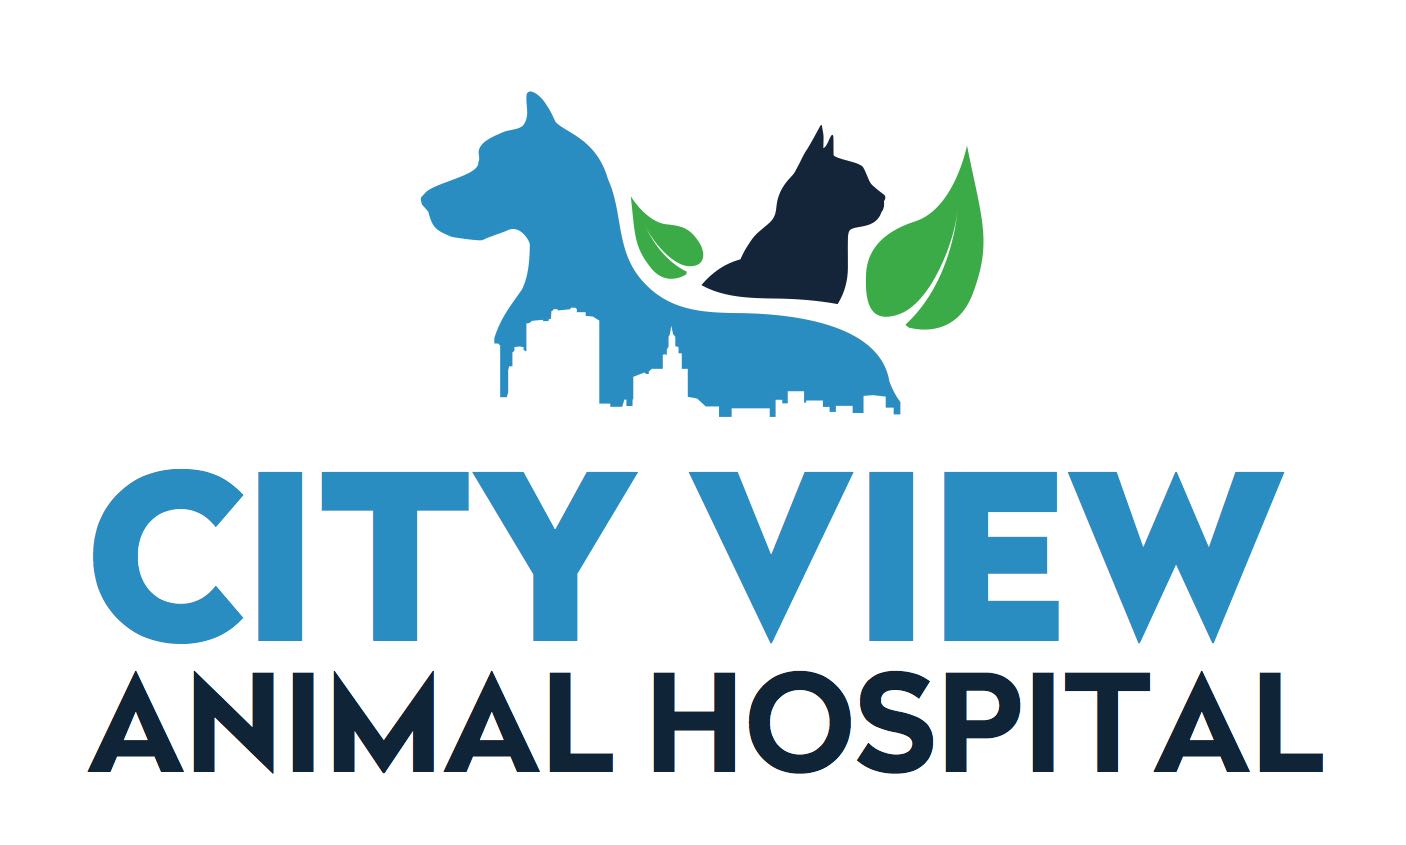 City View Animal Hospital